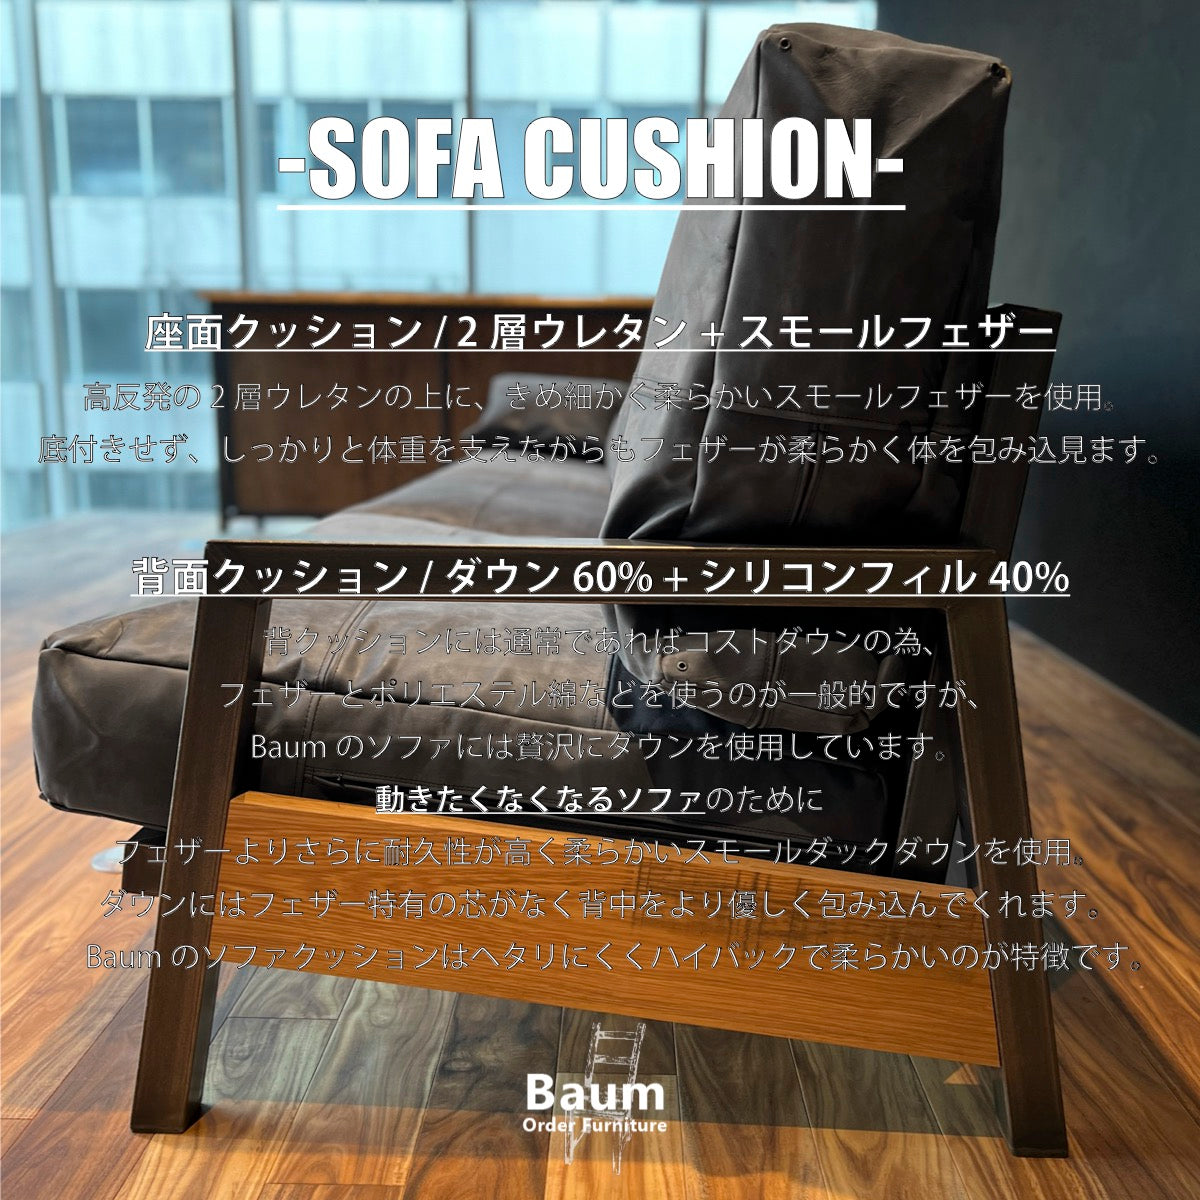 EMP Sofa 3Seater